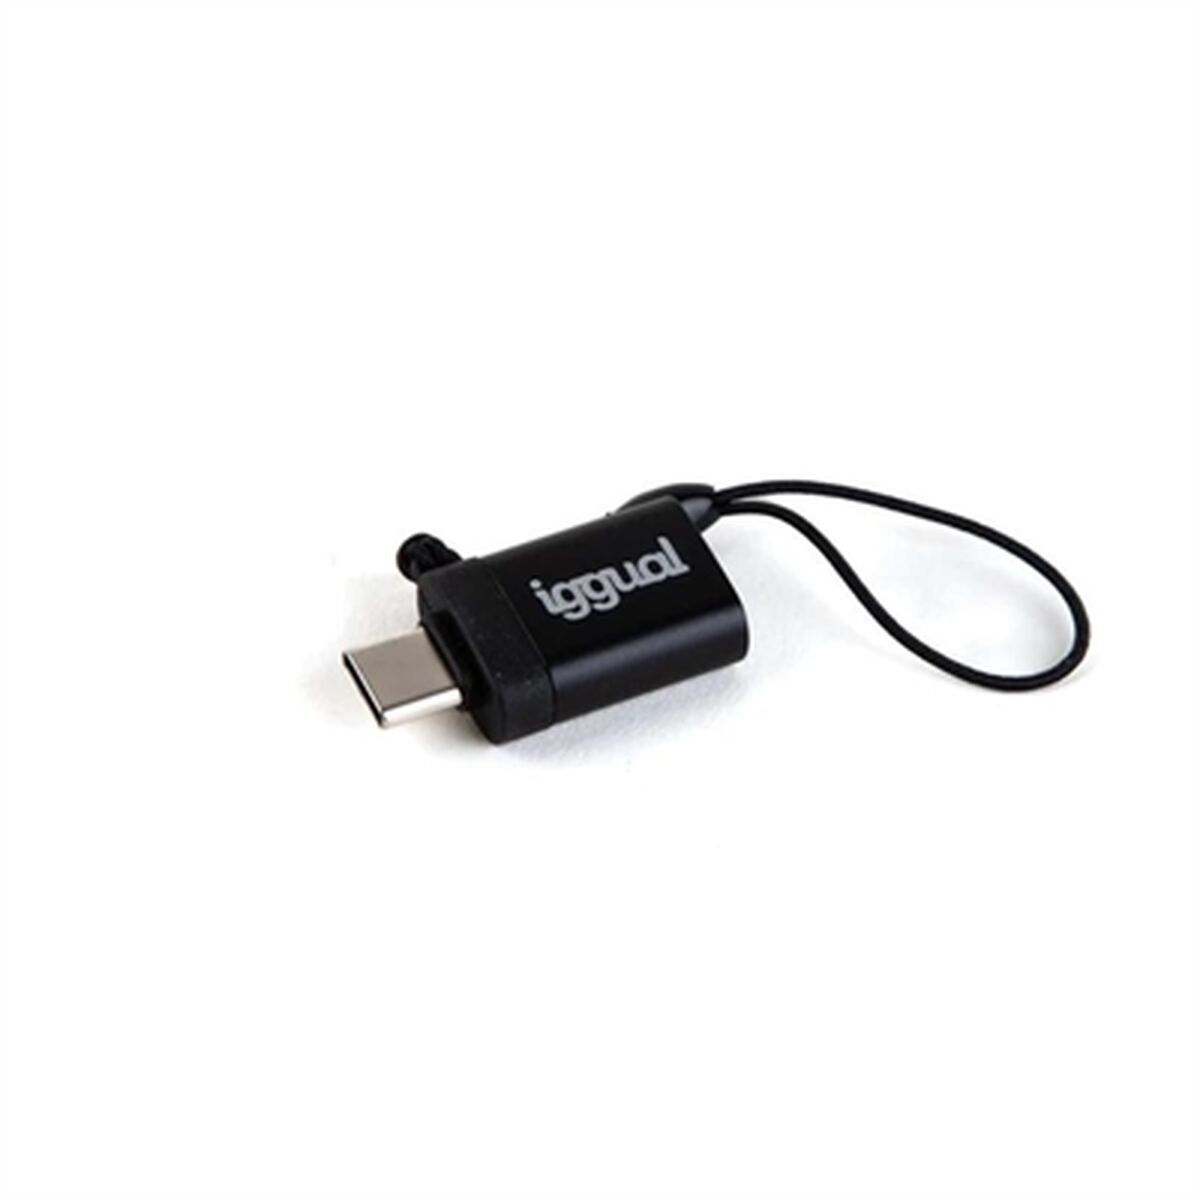 Adaptateur USB C vers USB iggual IGG318409 Noir